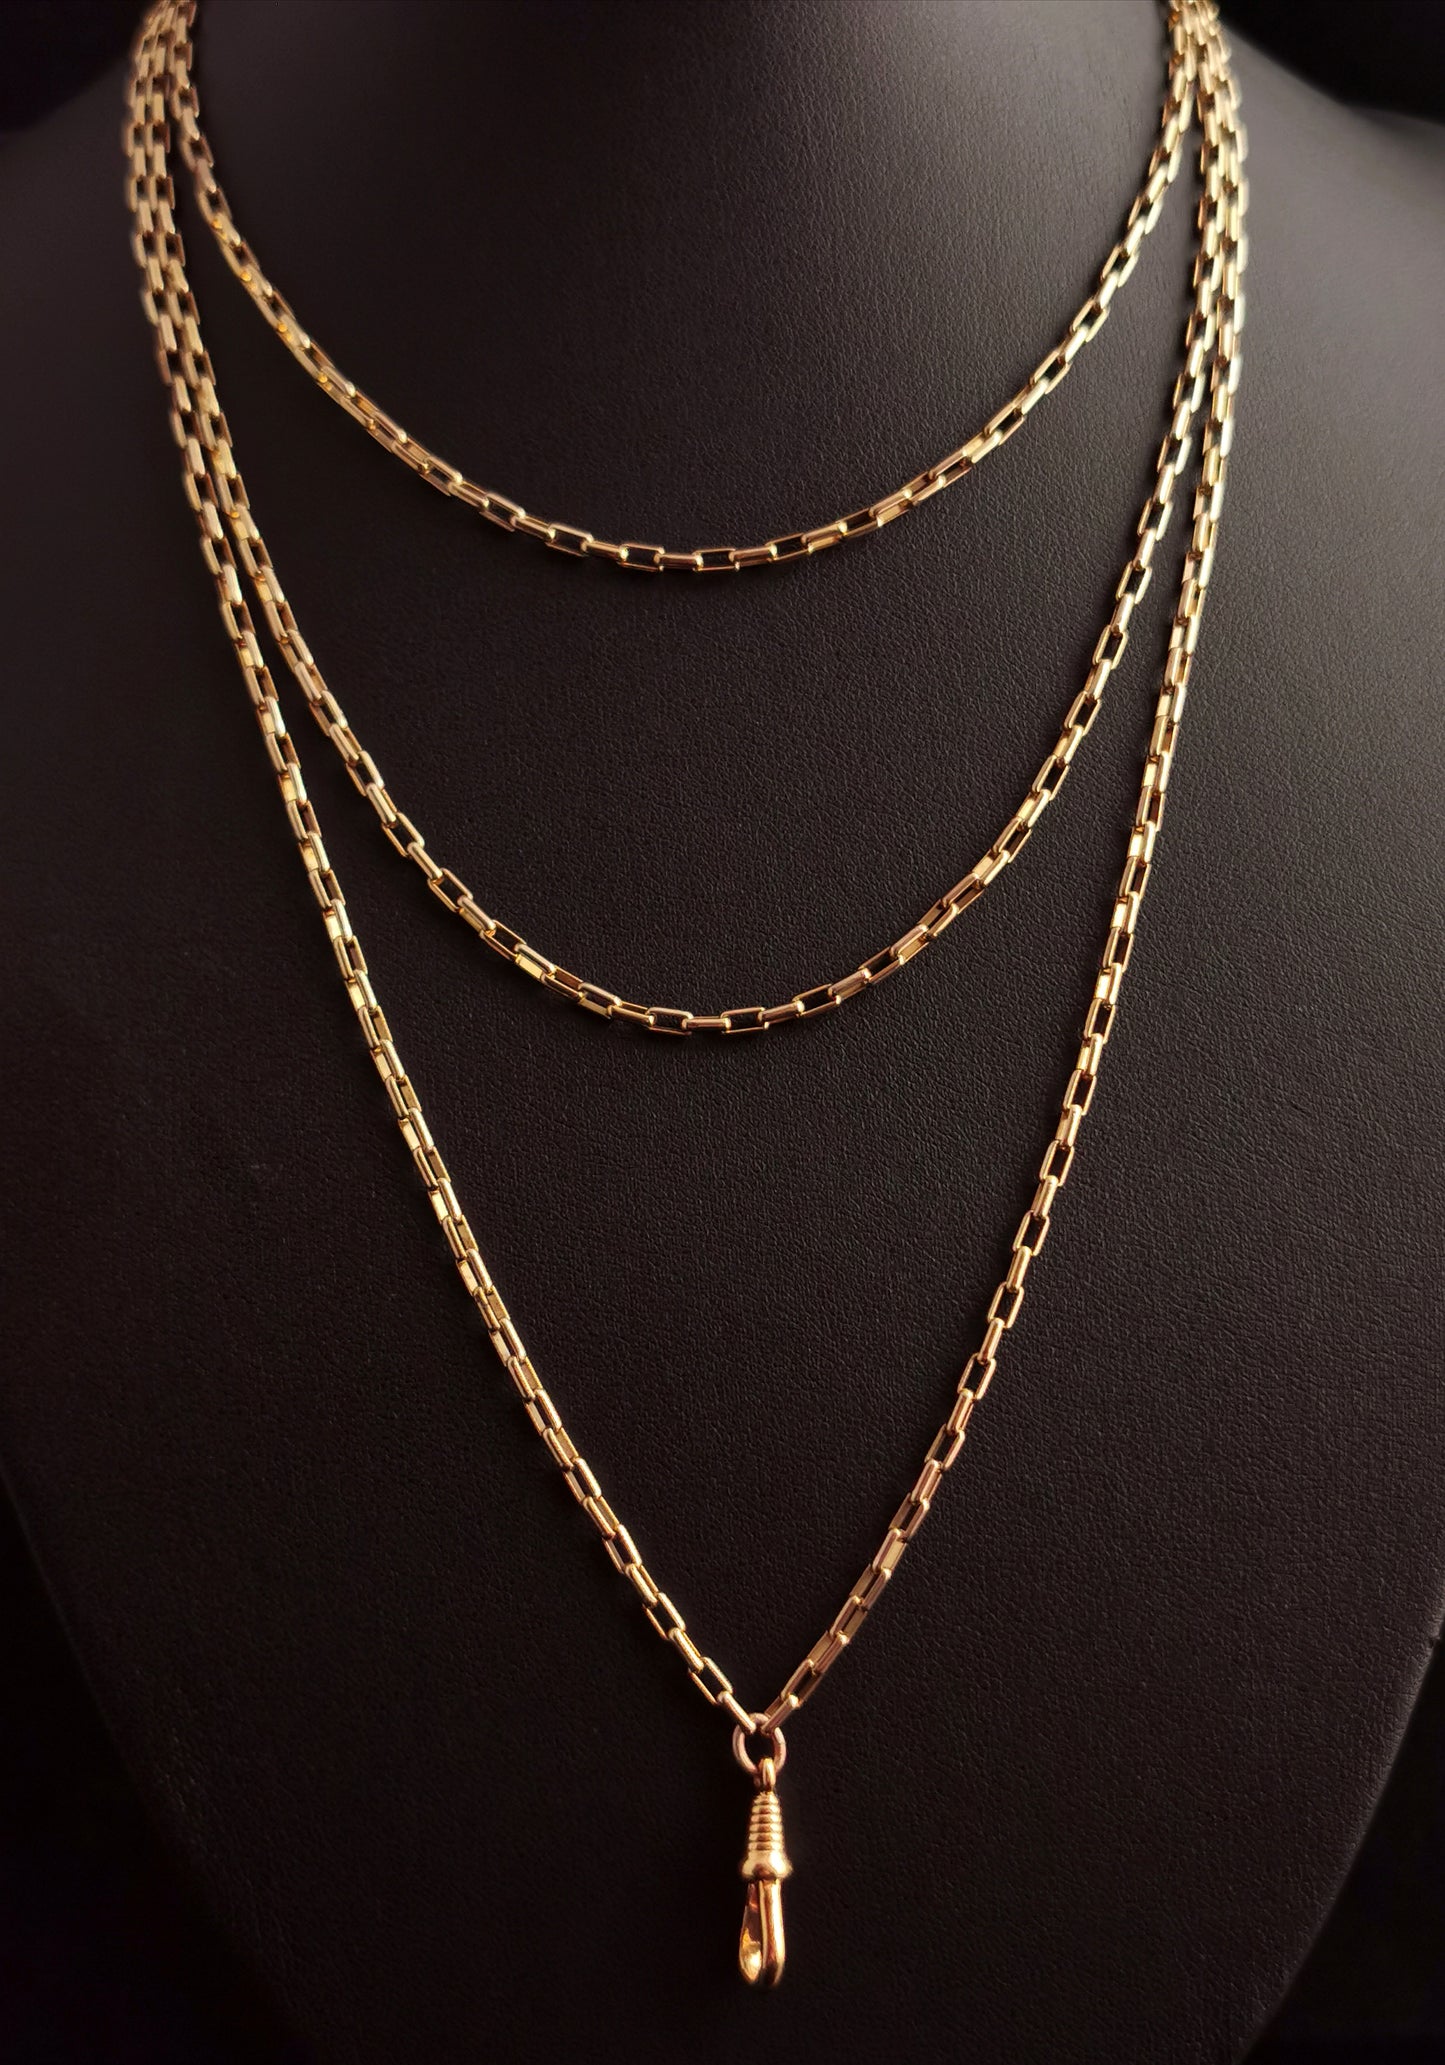 Antique longuard chain, Edwardian muff chain necklace